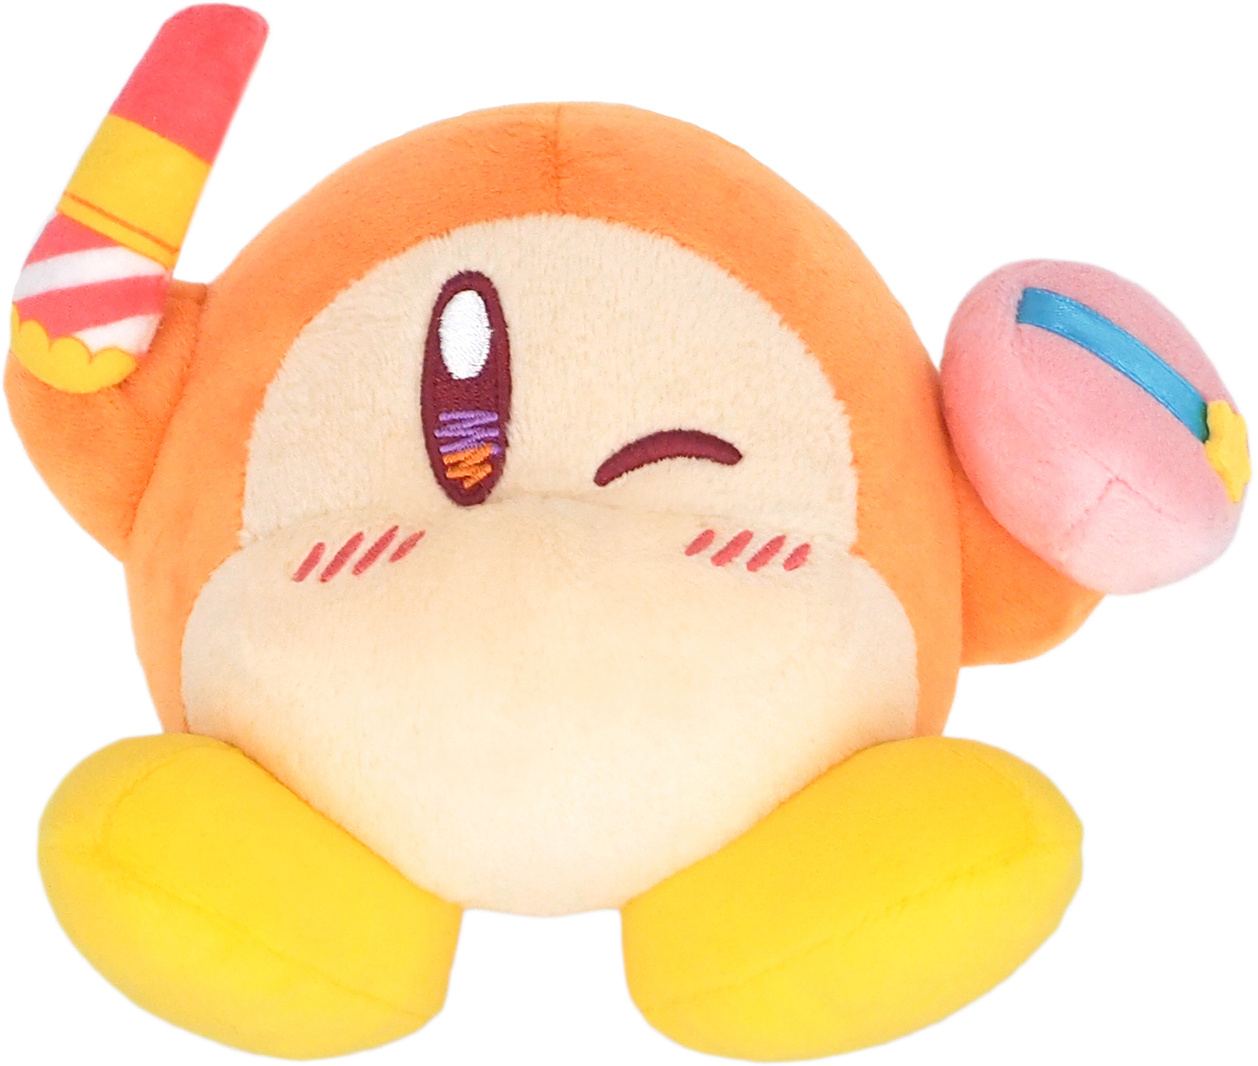 Kirby Happy Morning KHM-02 Makeup Play: Waddle Dee Plush San-ei Boeki